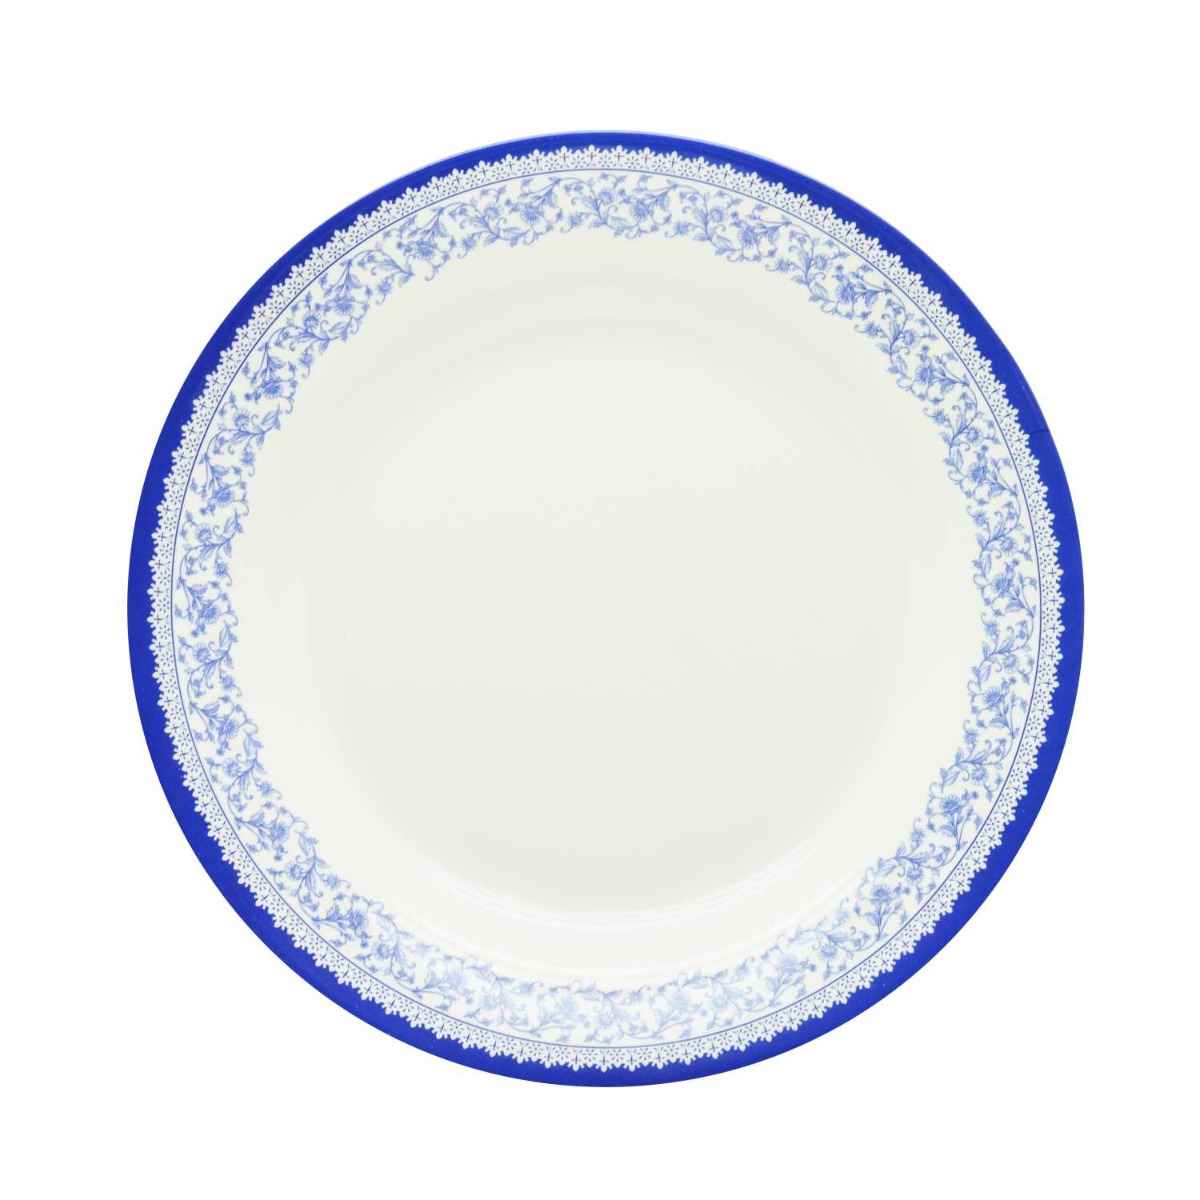 Rk Melamine Soup Plate